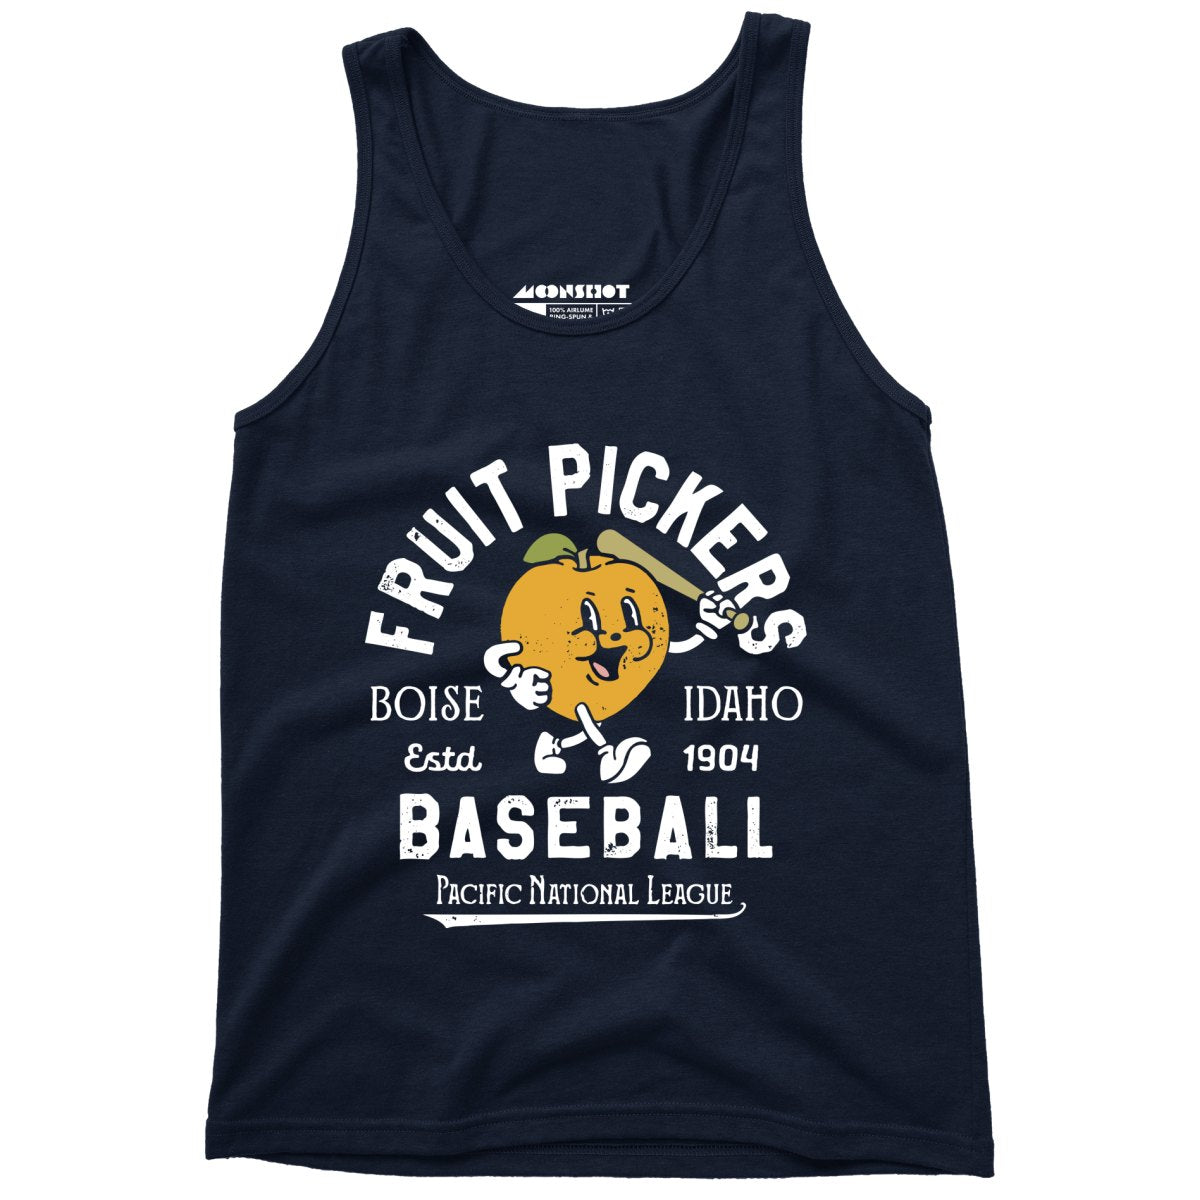 Boise Fruit Pickers - Idaho - Vintage Defunct Baseball Teams - Unisex Tank Top